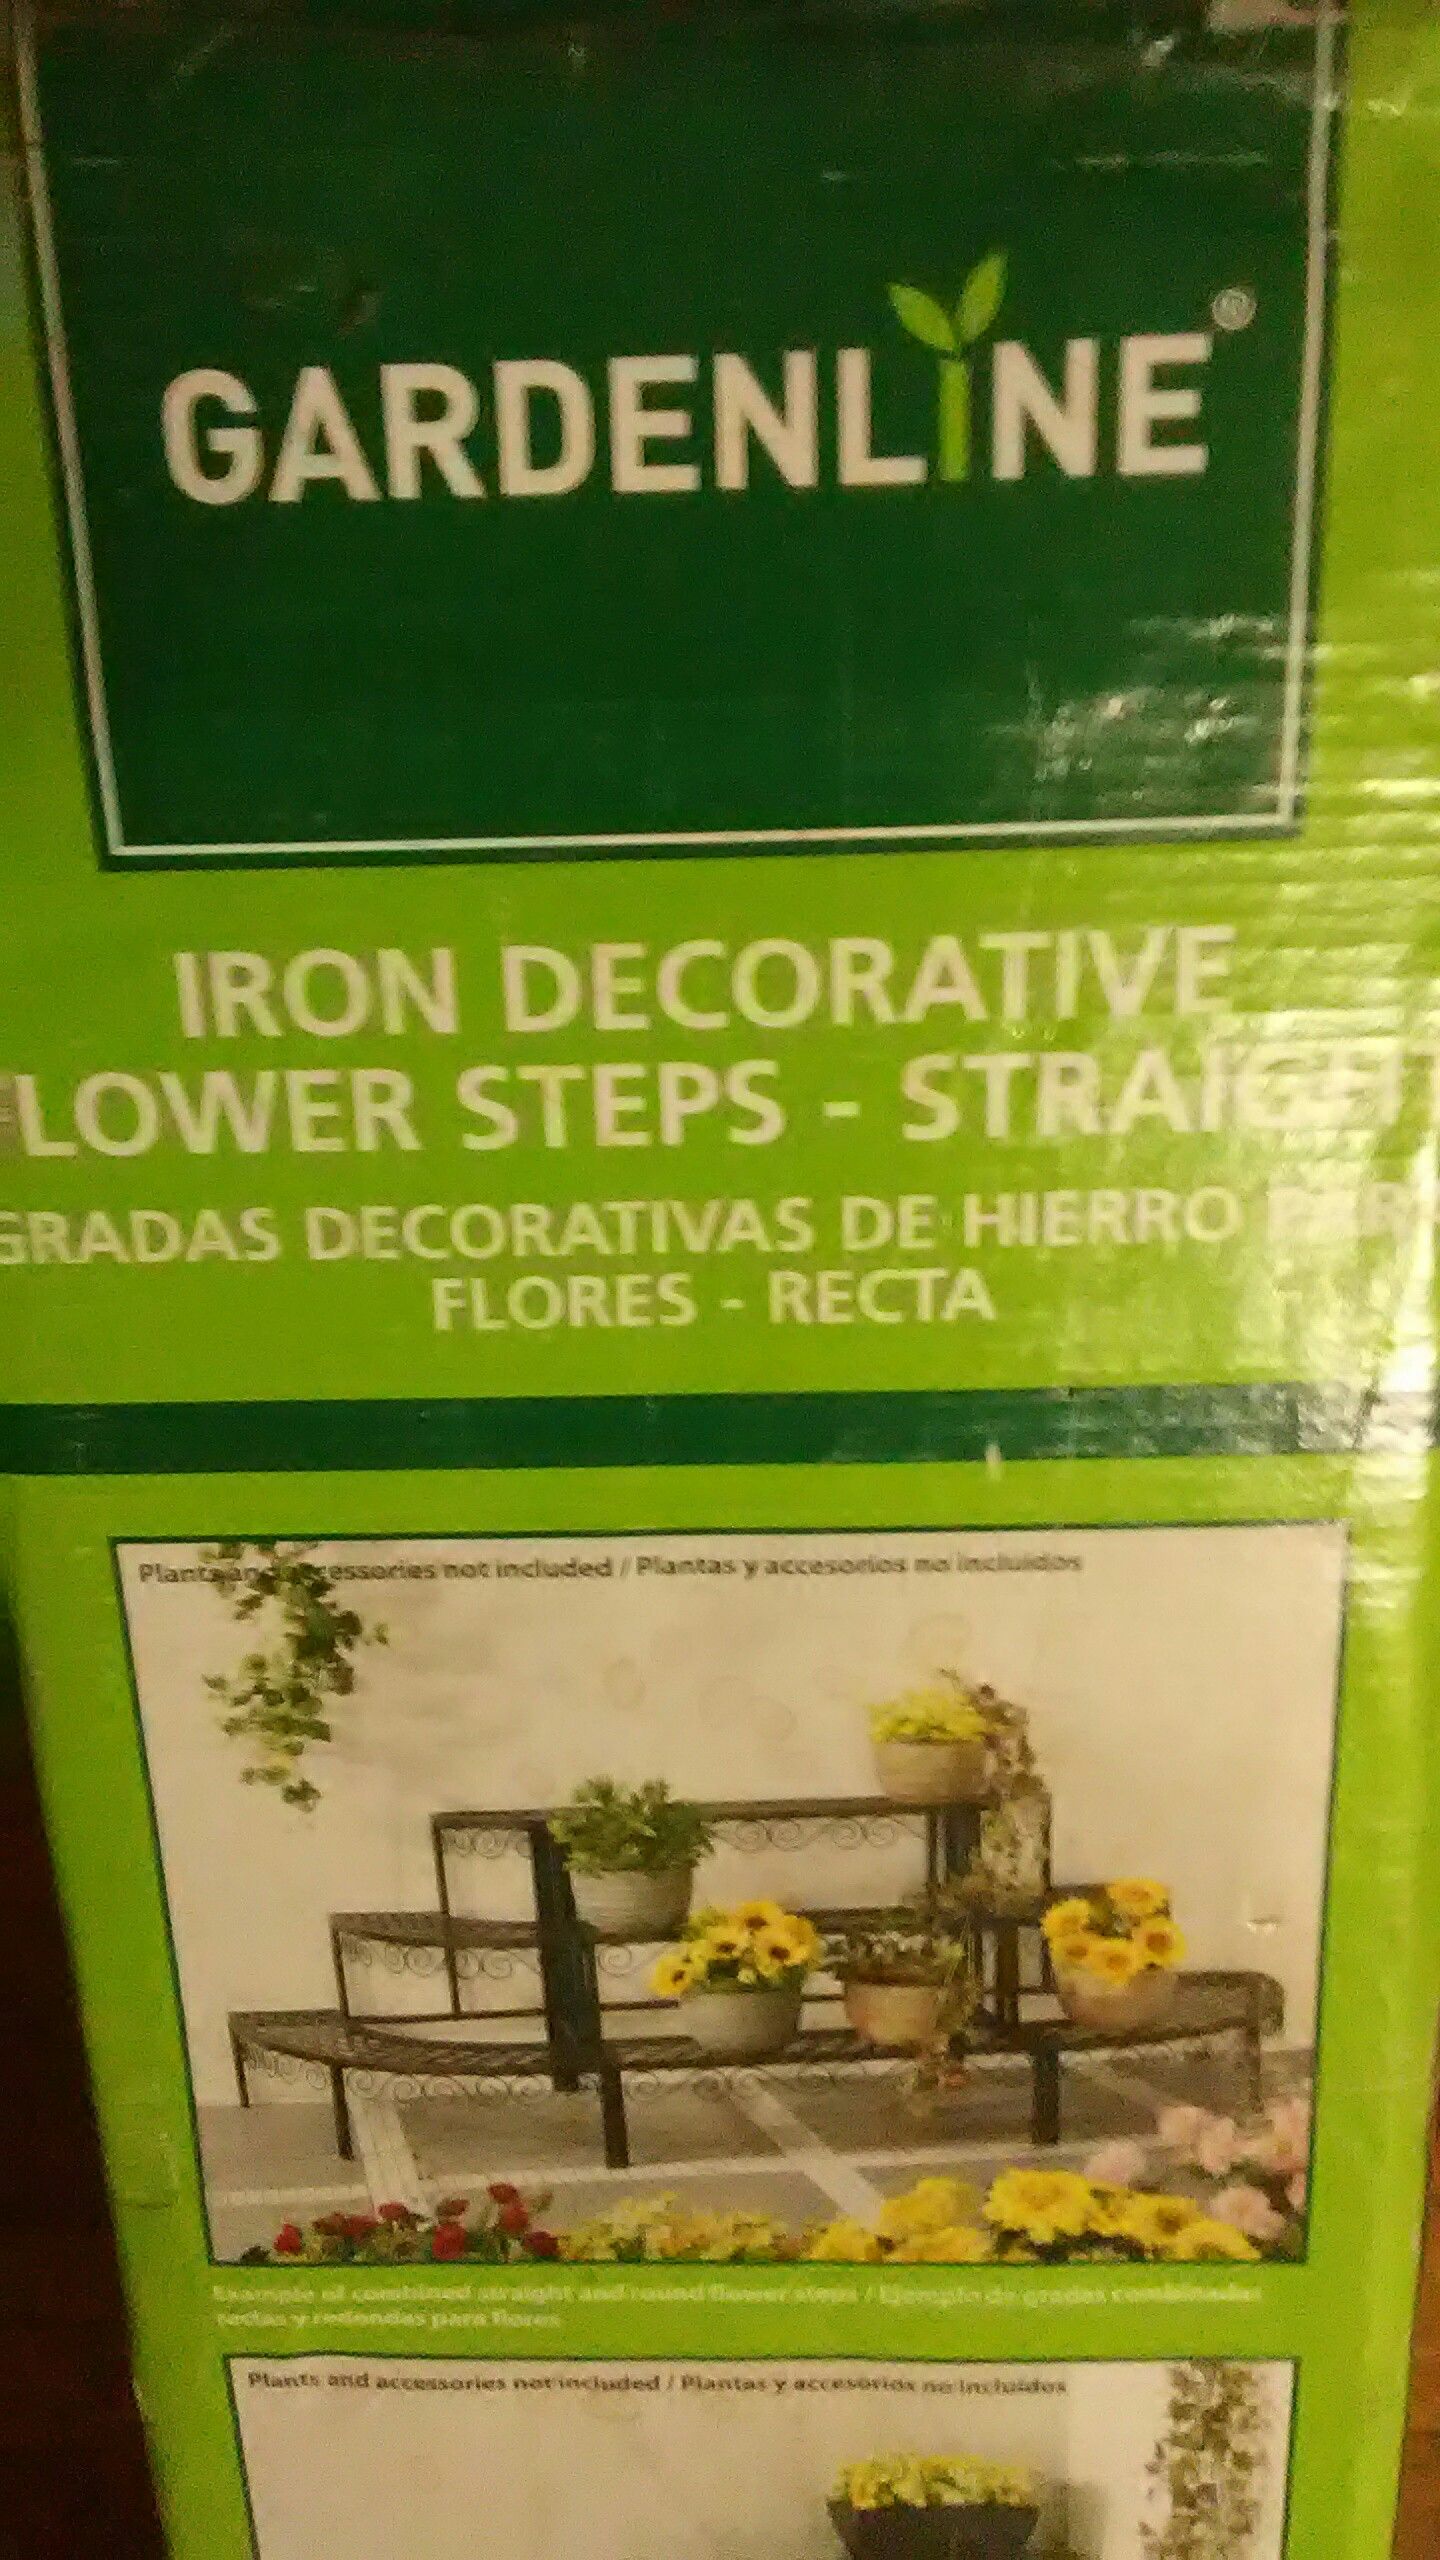 Iron decorative